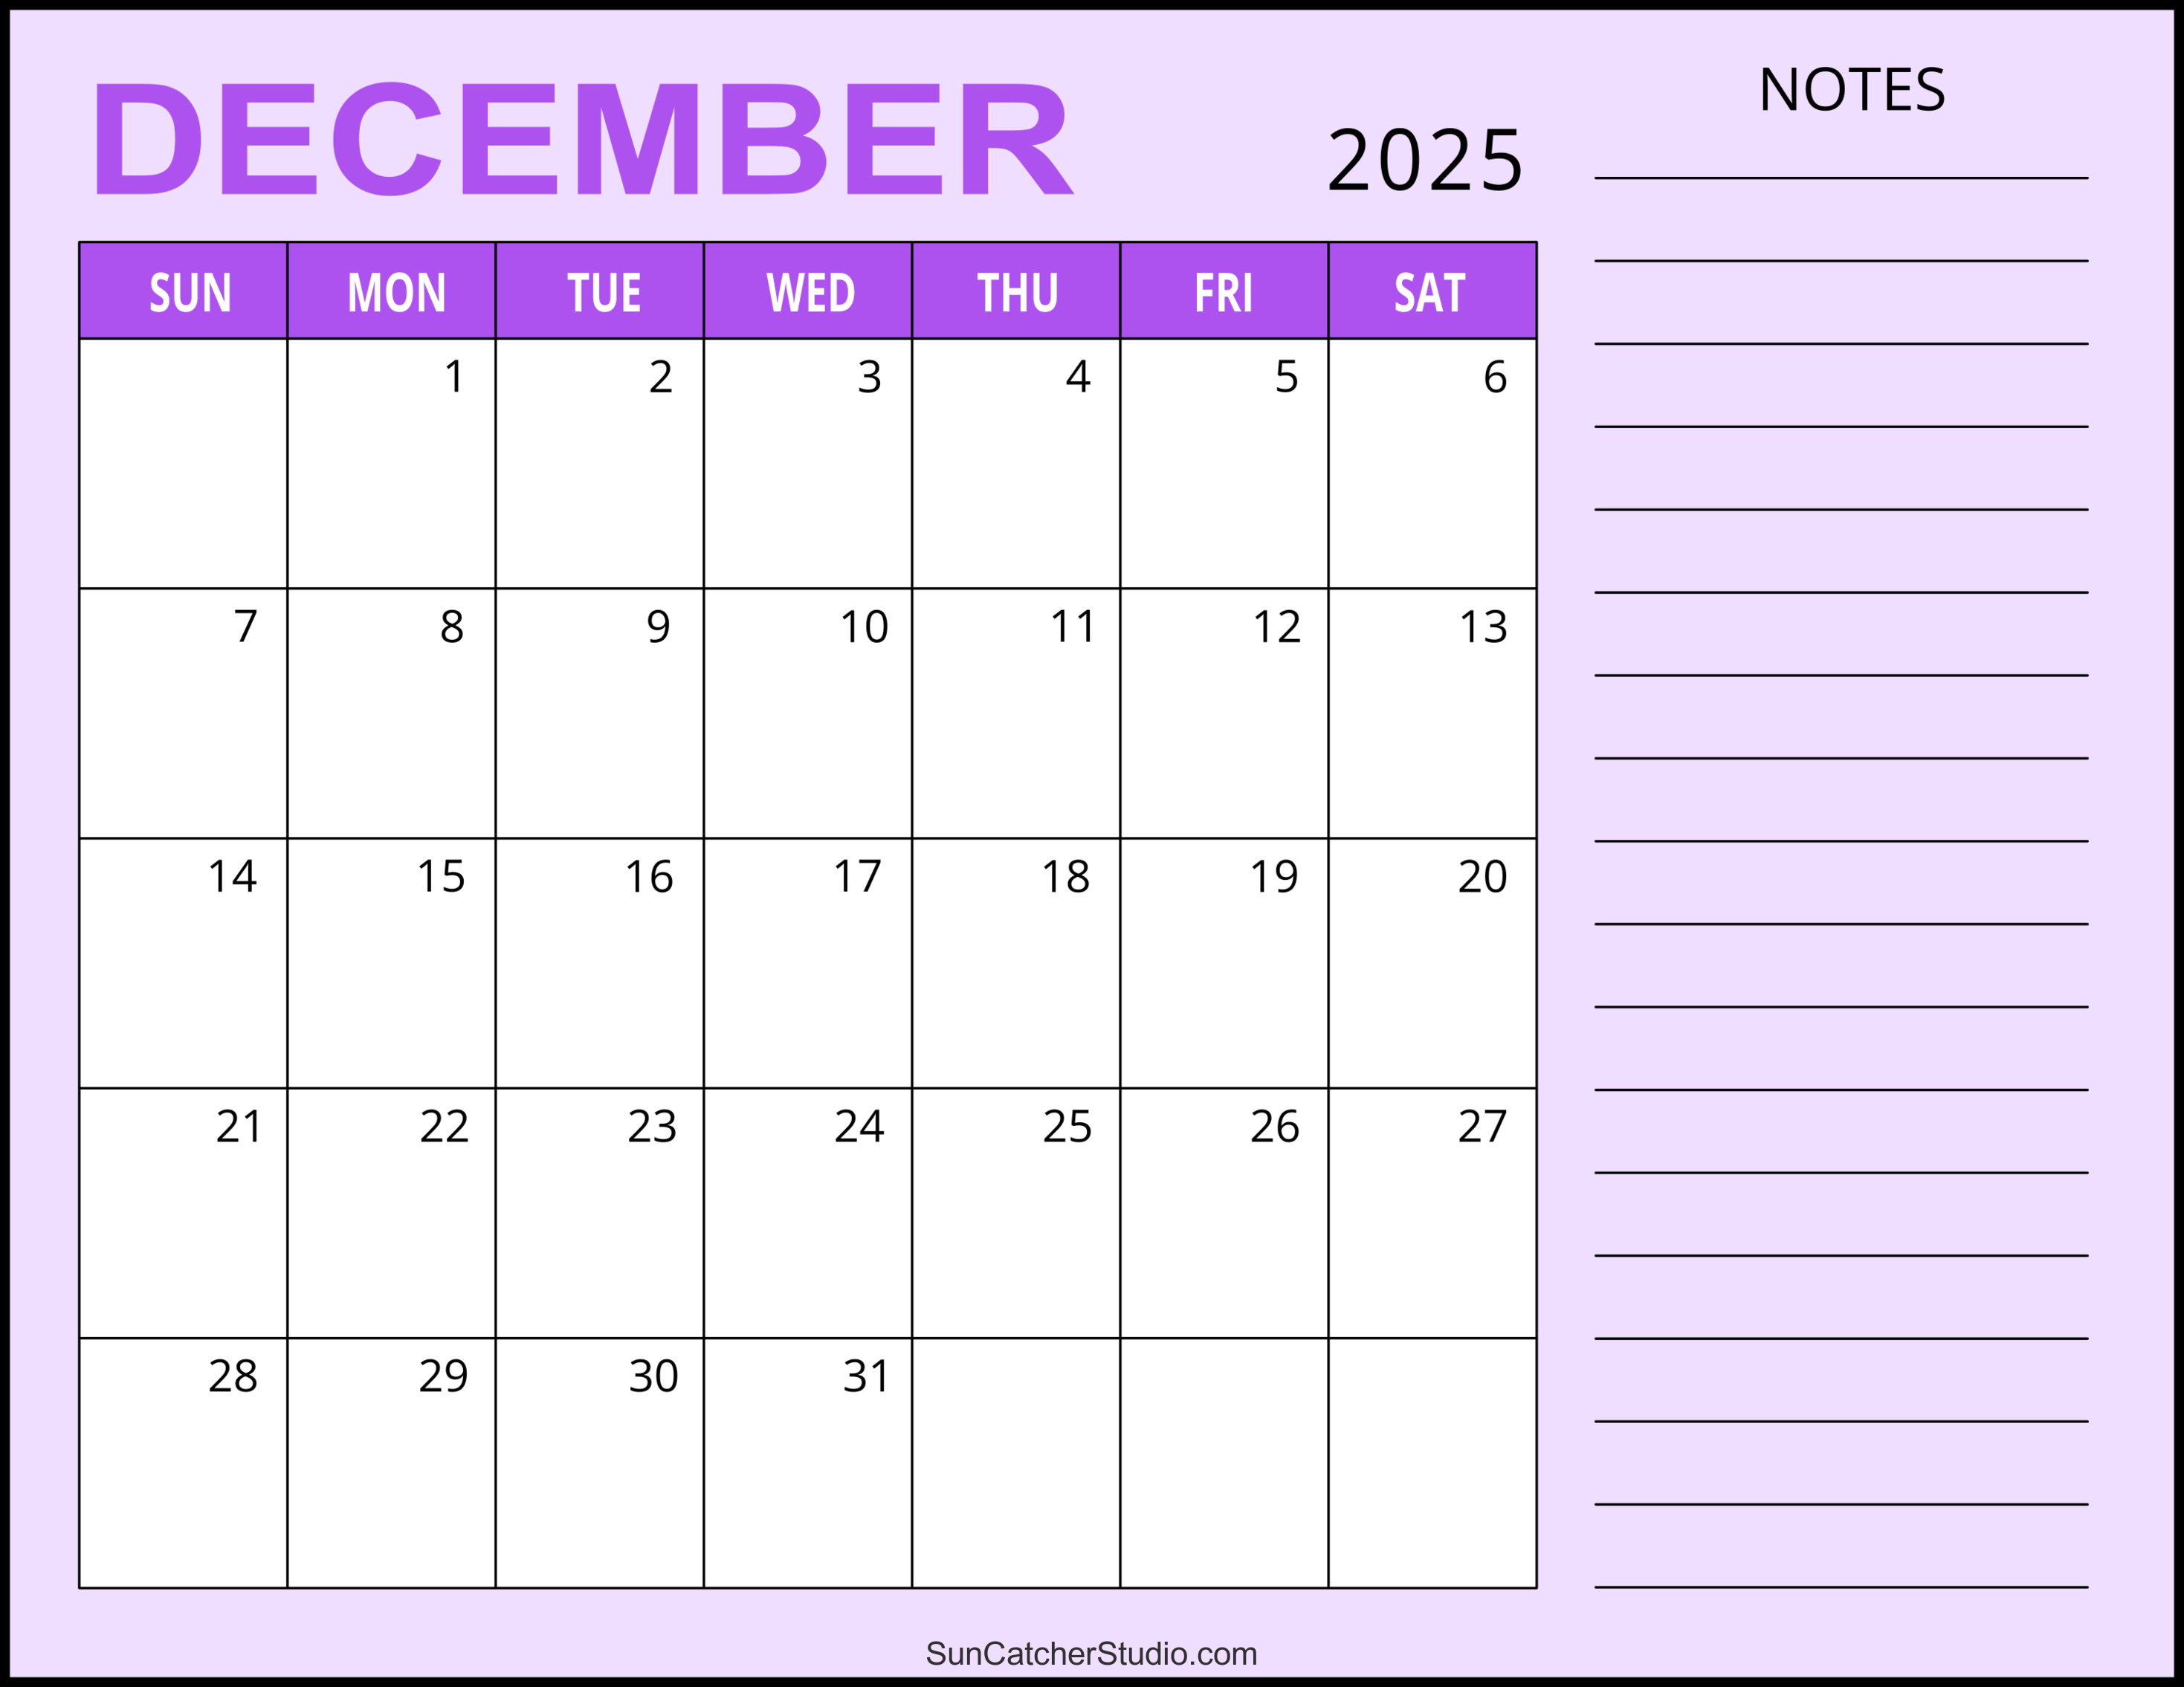 December 2025 Calendar Free Printable DIY Projects Patterns 